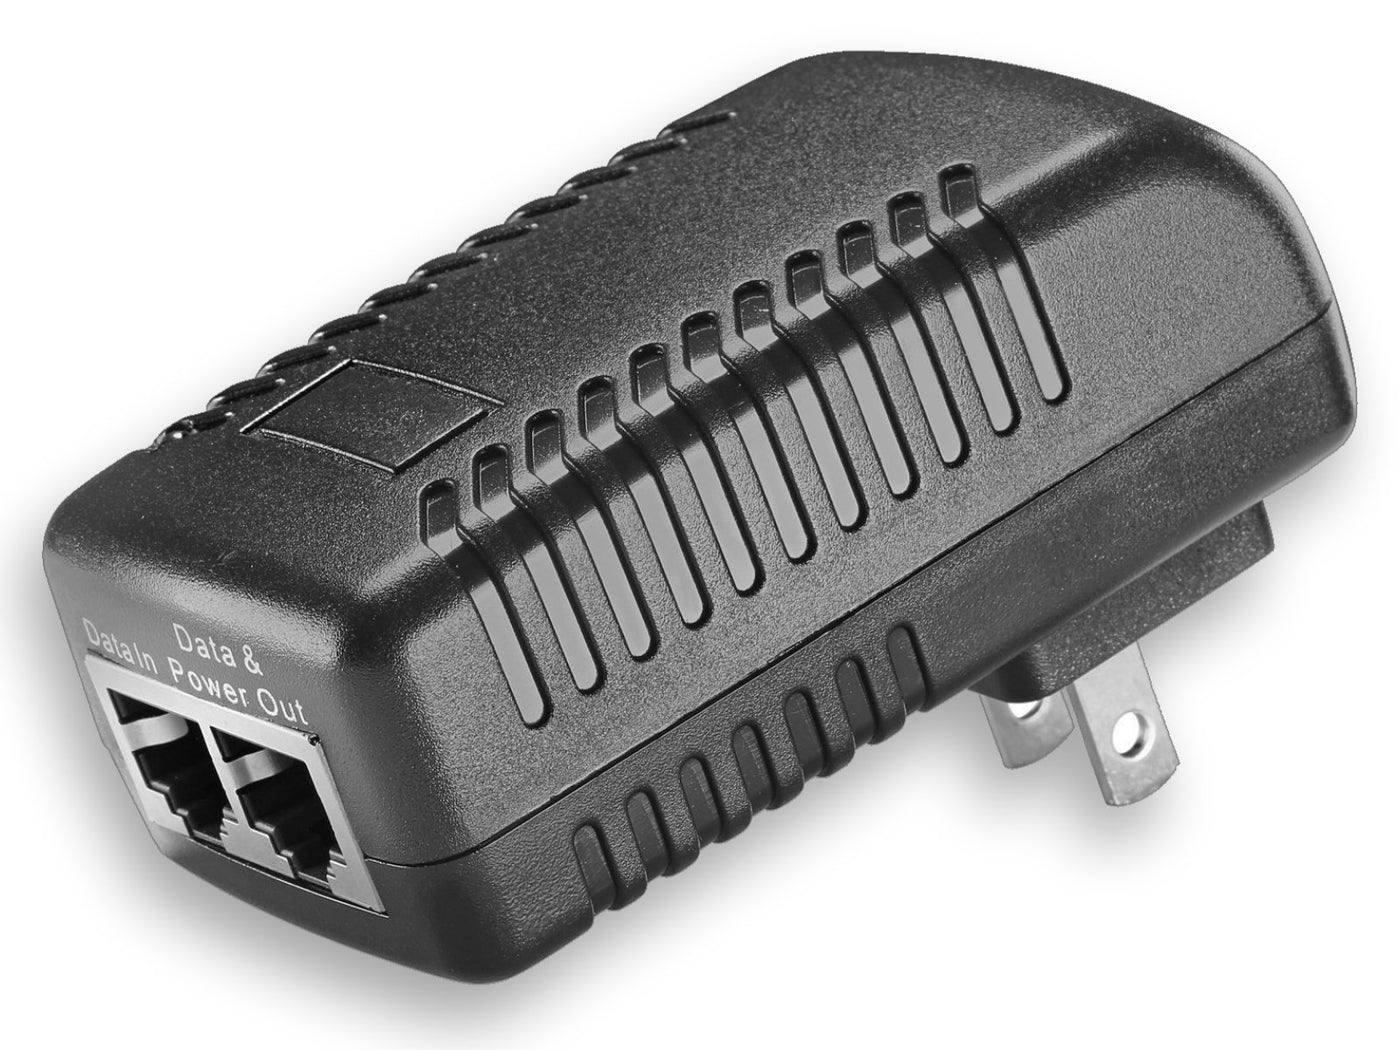 Ethernet+USB to Lightning Adapter – SimpliDock